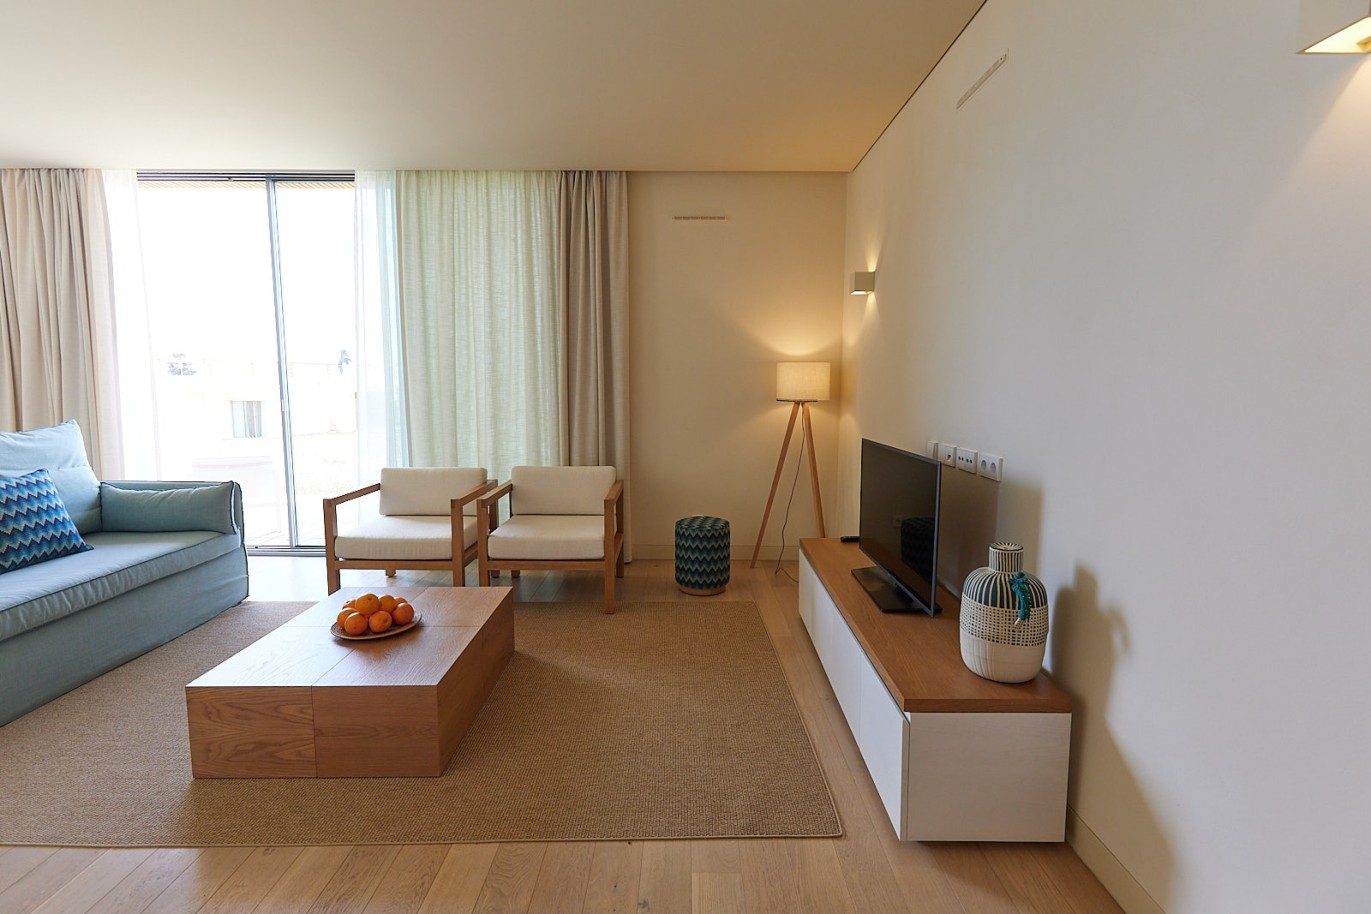 2 bedroom apartment in resort, for sale in Porches, Algarve_230590